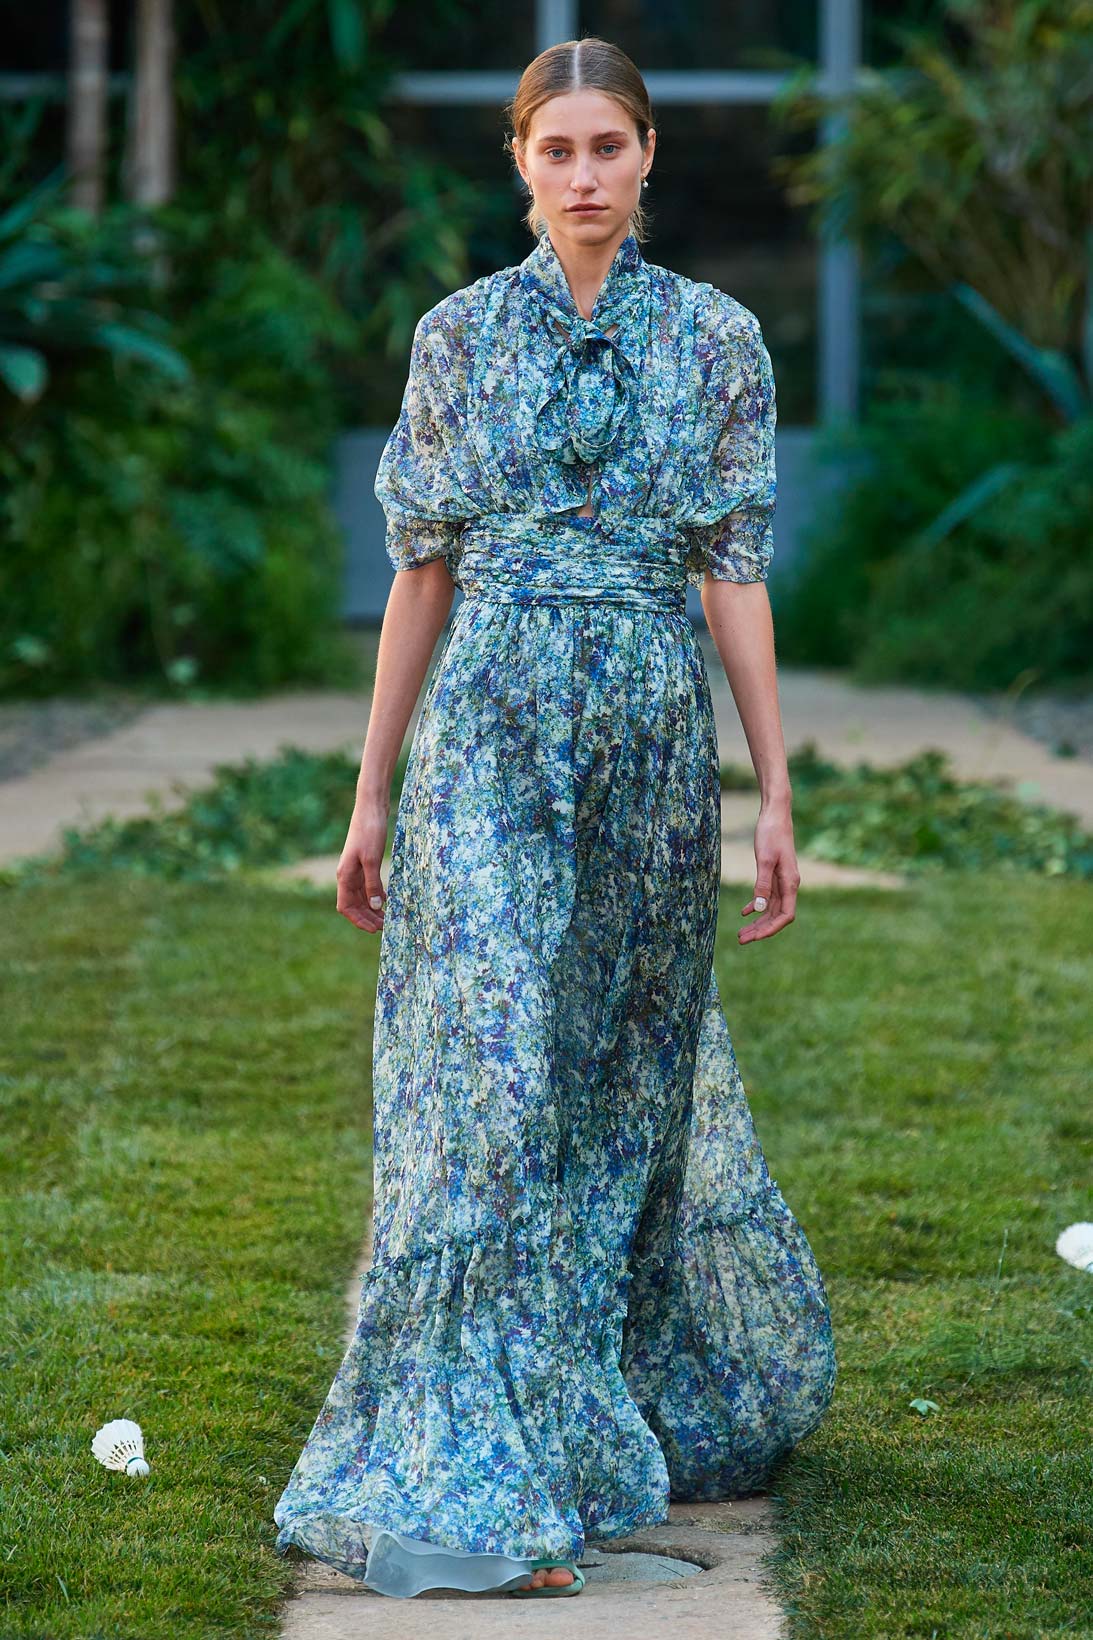 Green Chiffon Floral Printed Gown – Shopaholics Choice